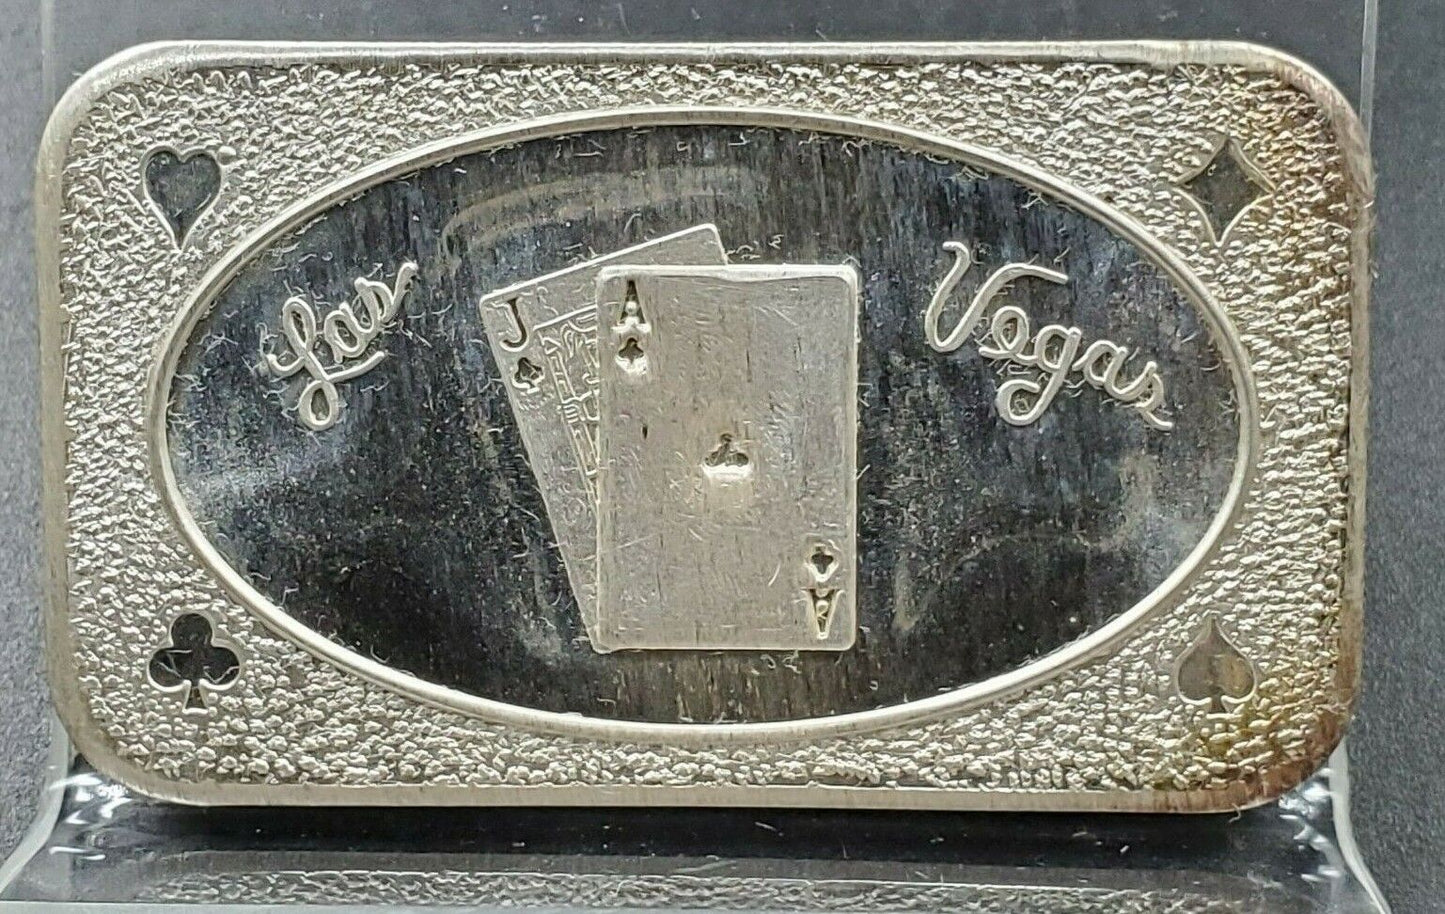 Las Vegas The Mother Lode Mint 1 oz silver Art Bar .999 Fine Uncleaned Original